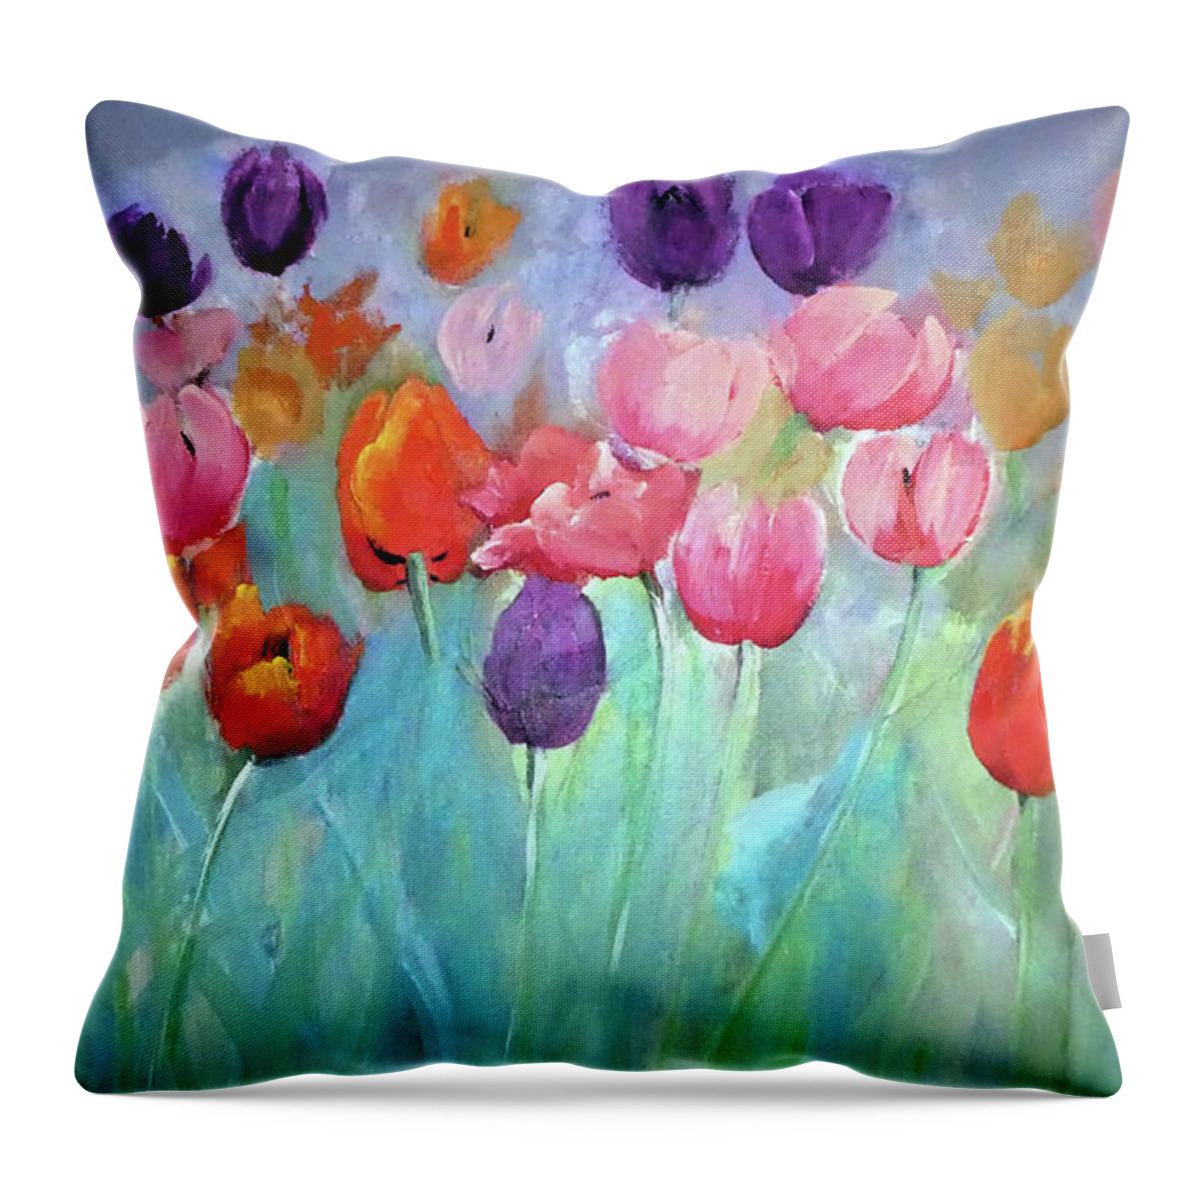 Tulip Throw Pillow featuring the digital art Tulip Timeless By Lisa Kaiser by Lisa Kaiser